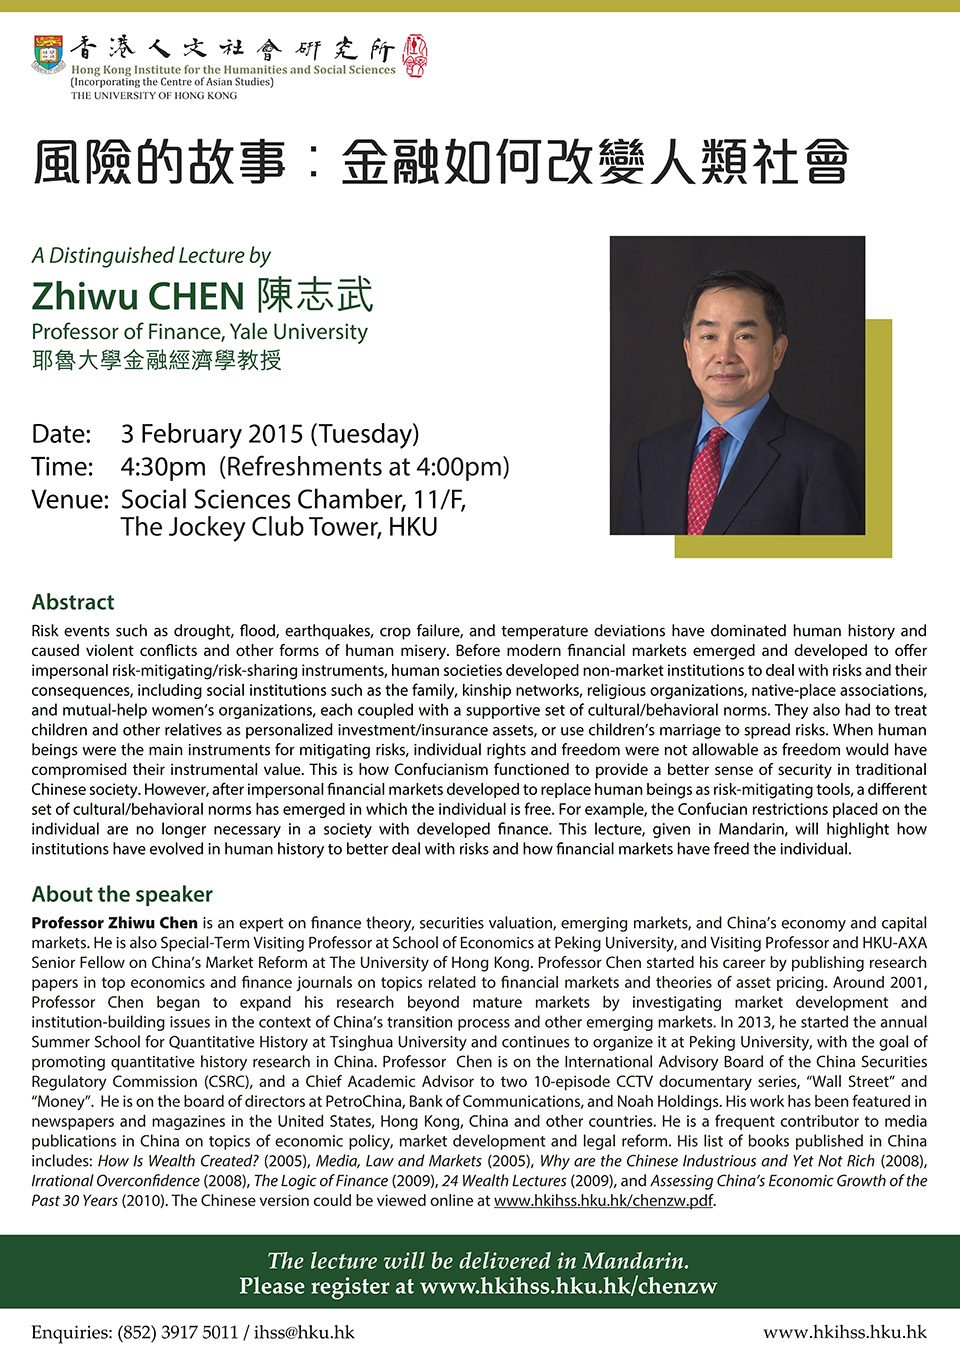 Distinguished Lecture on “風險的故事: 金融如何改變人類社會” by Professor Zhiwu Chen (February 3, 2015)